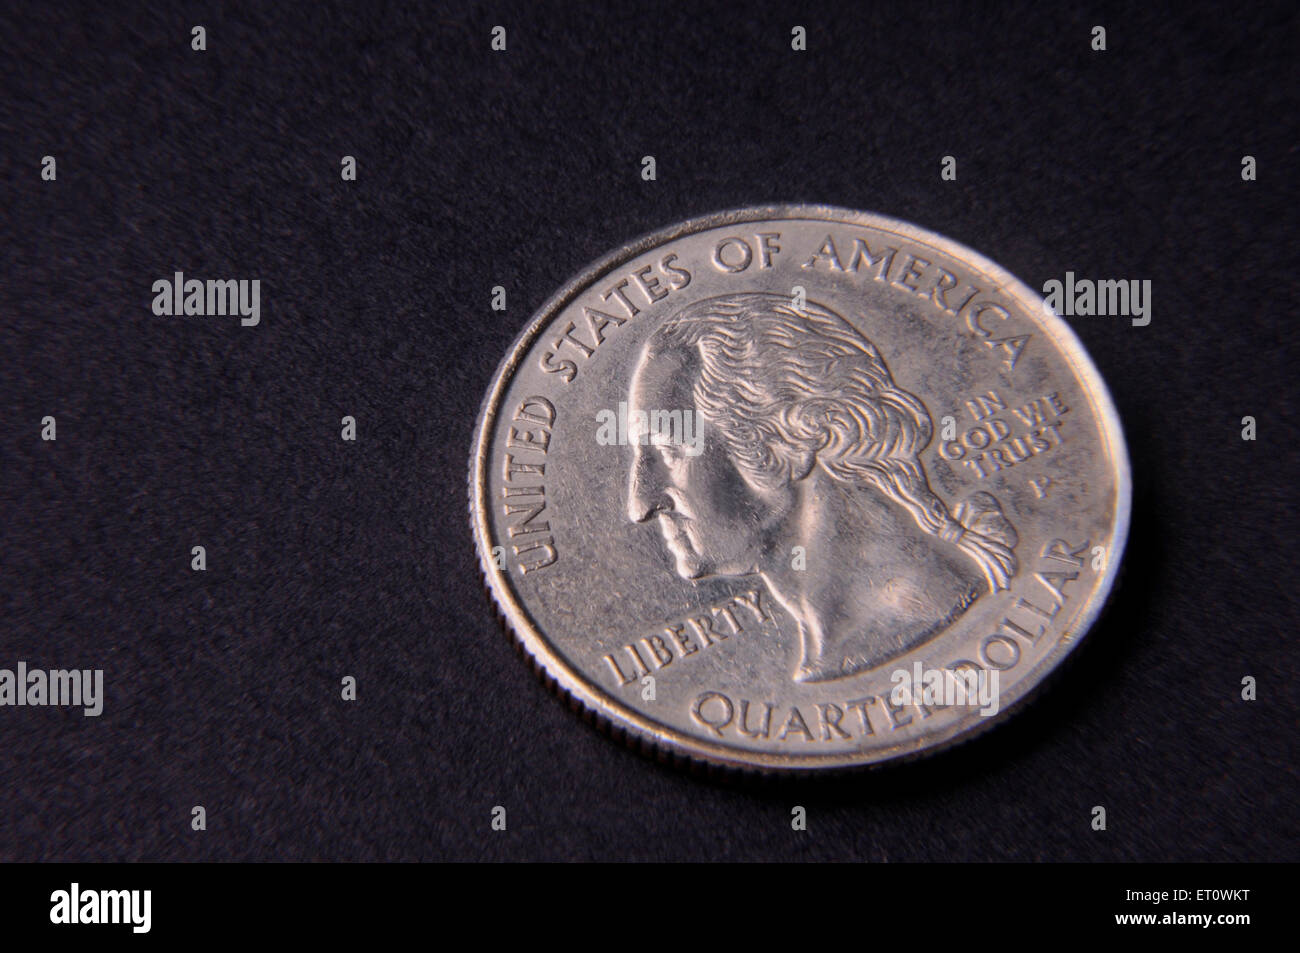 concept of American quarter dollar coins Stock Photo